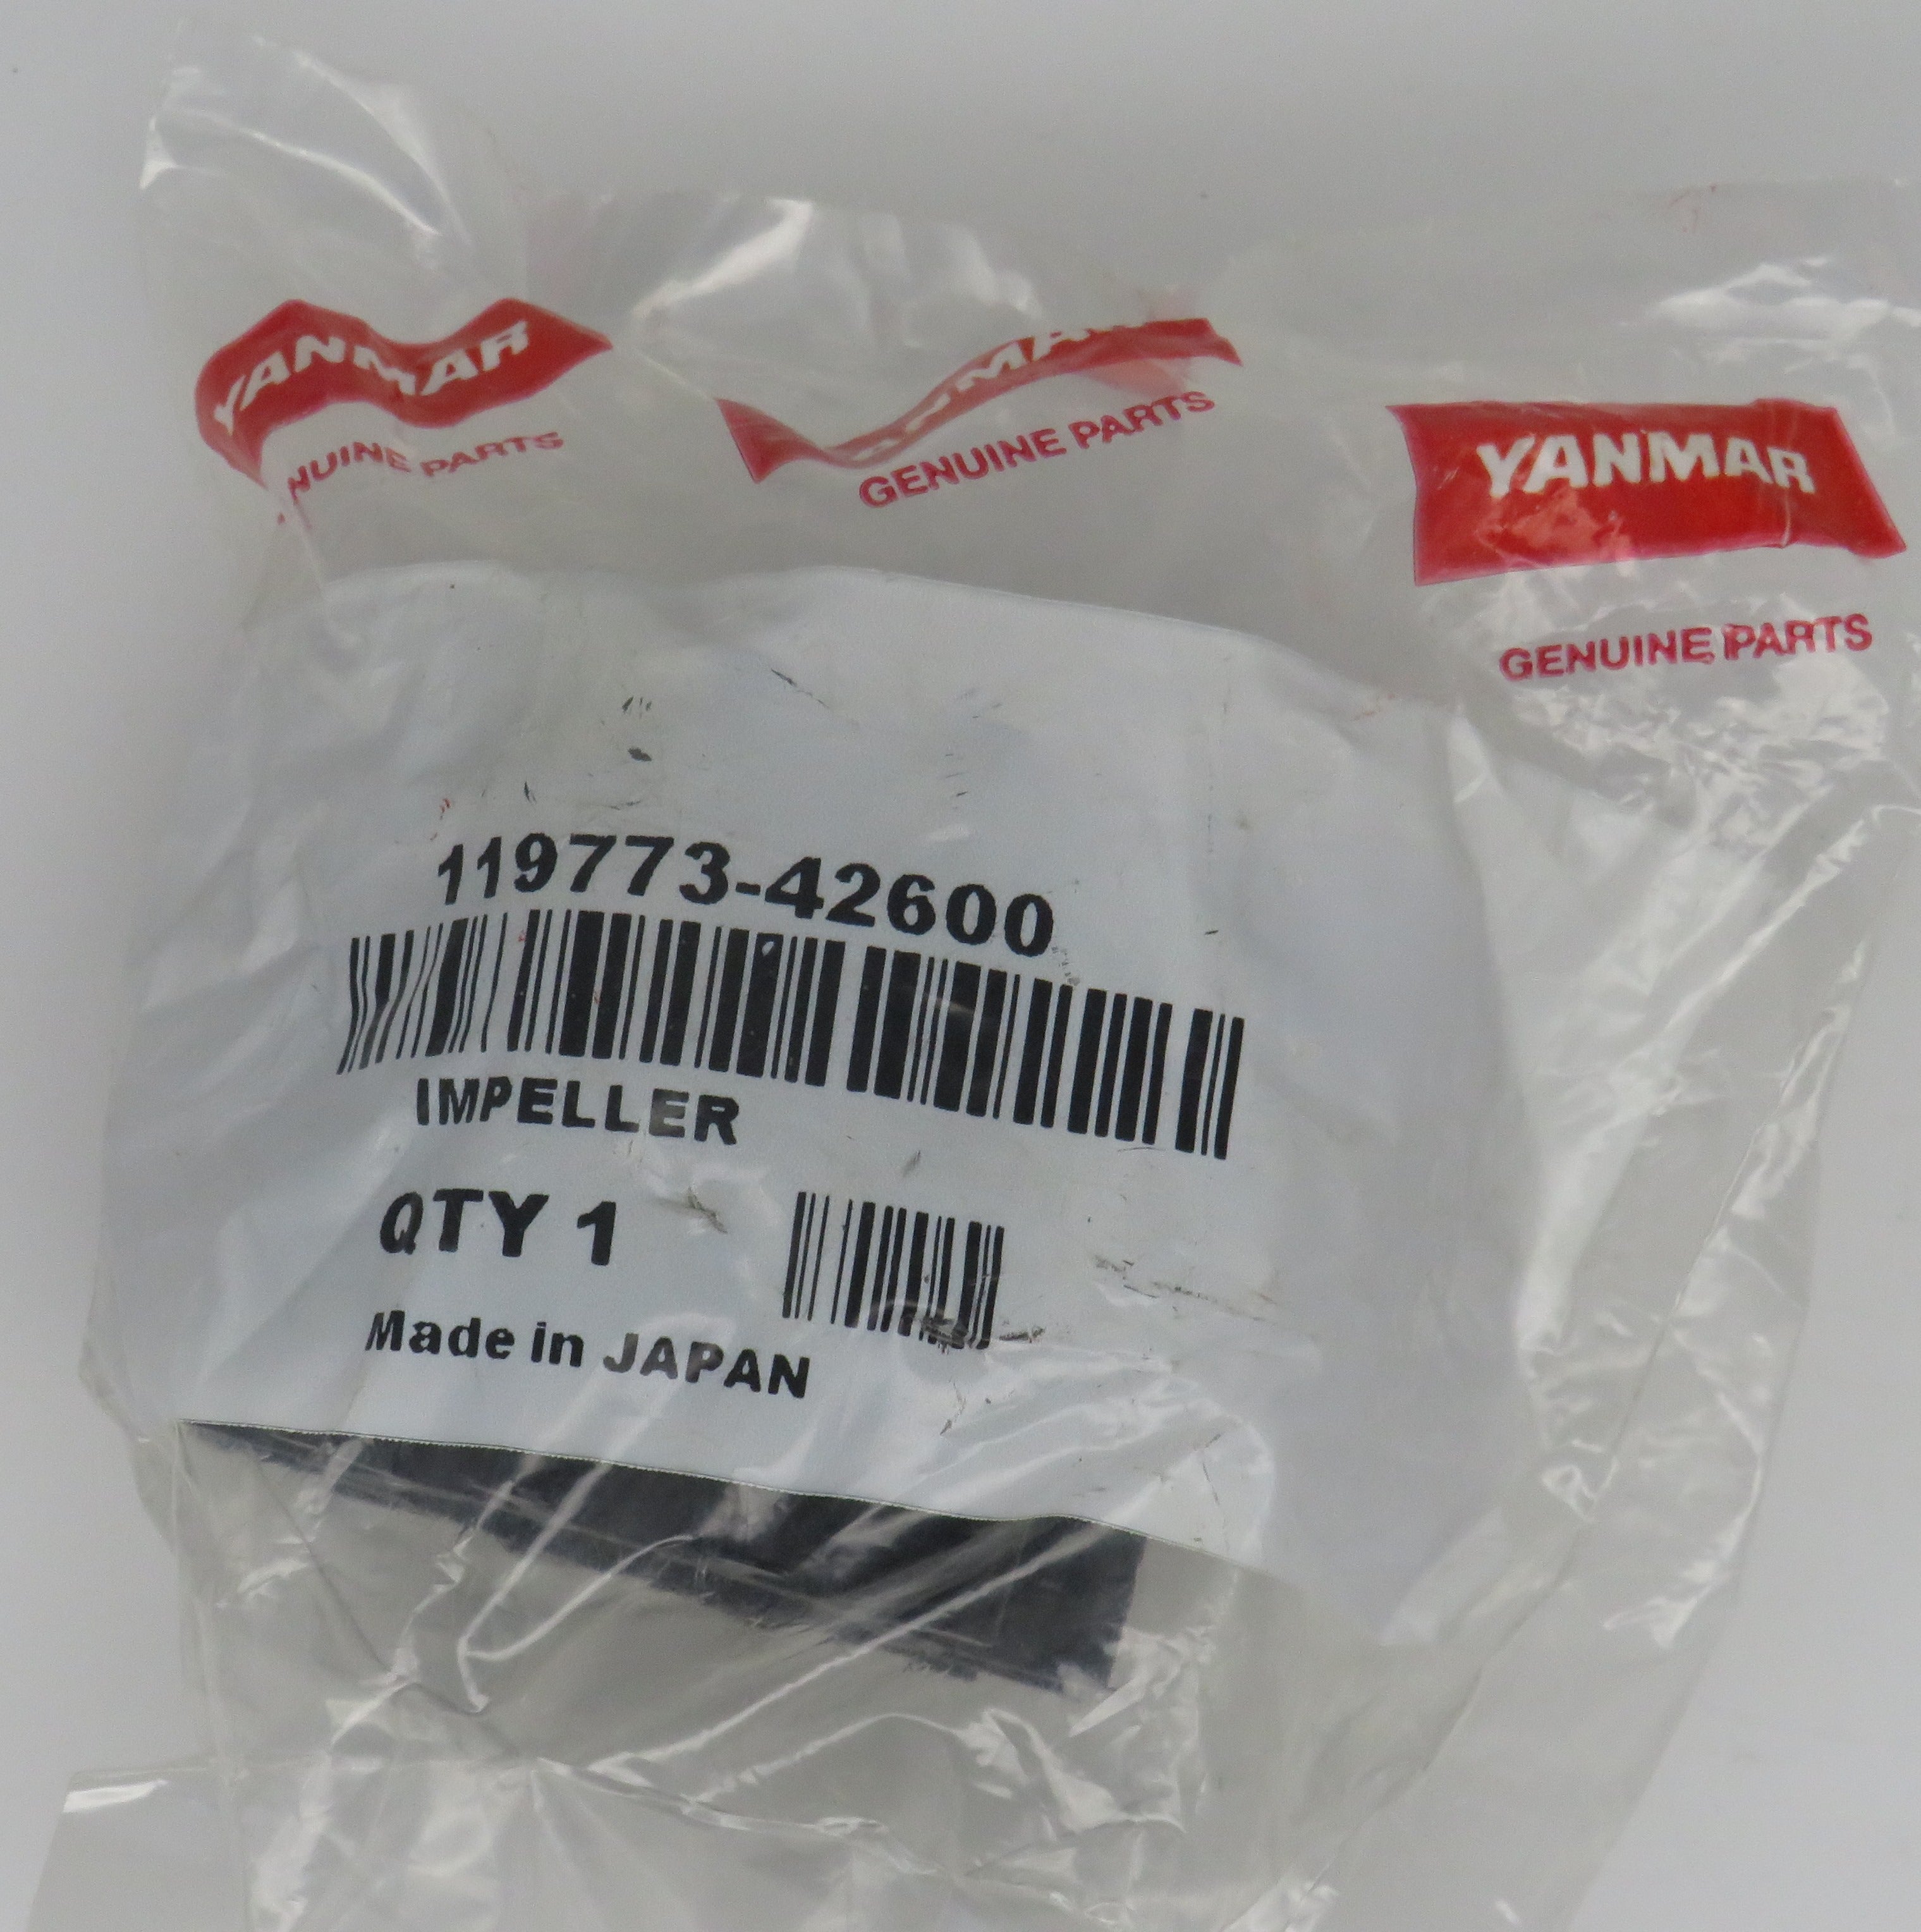 119773-42600 Yanmar Impeller JP (Superceded 119773-42600-01)